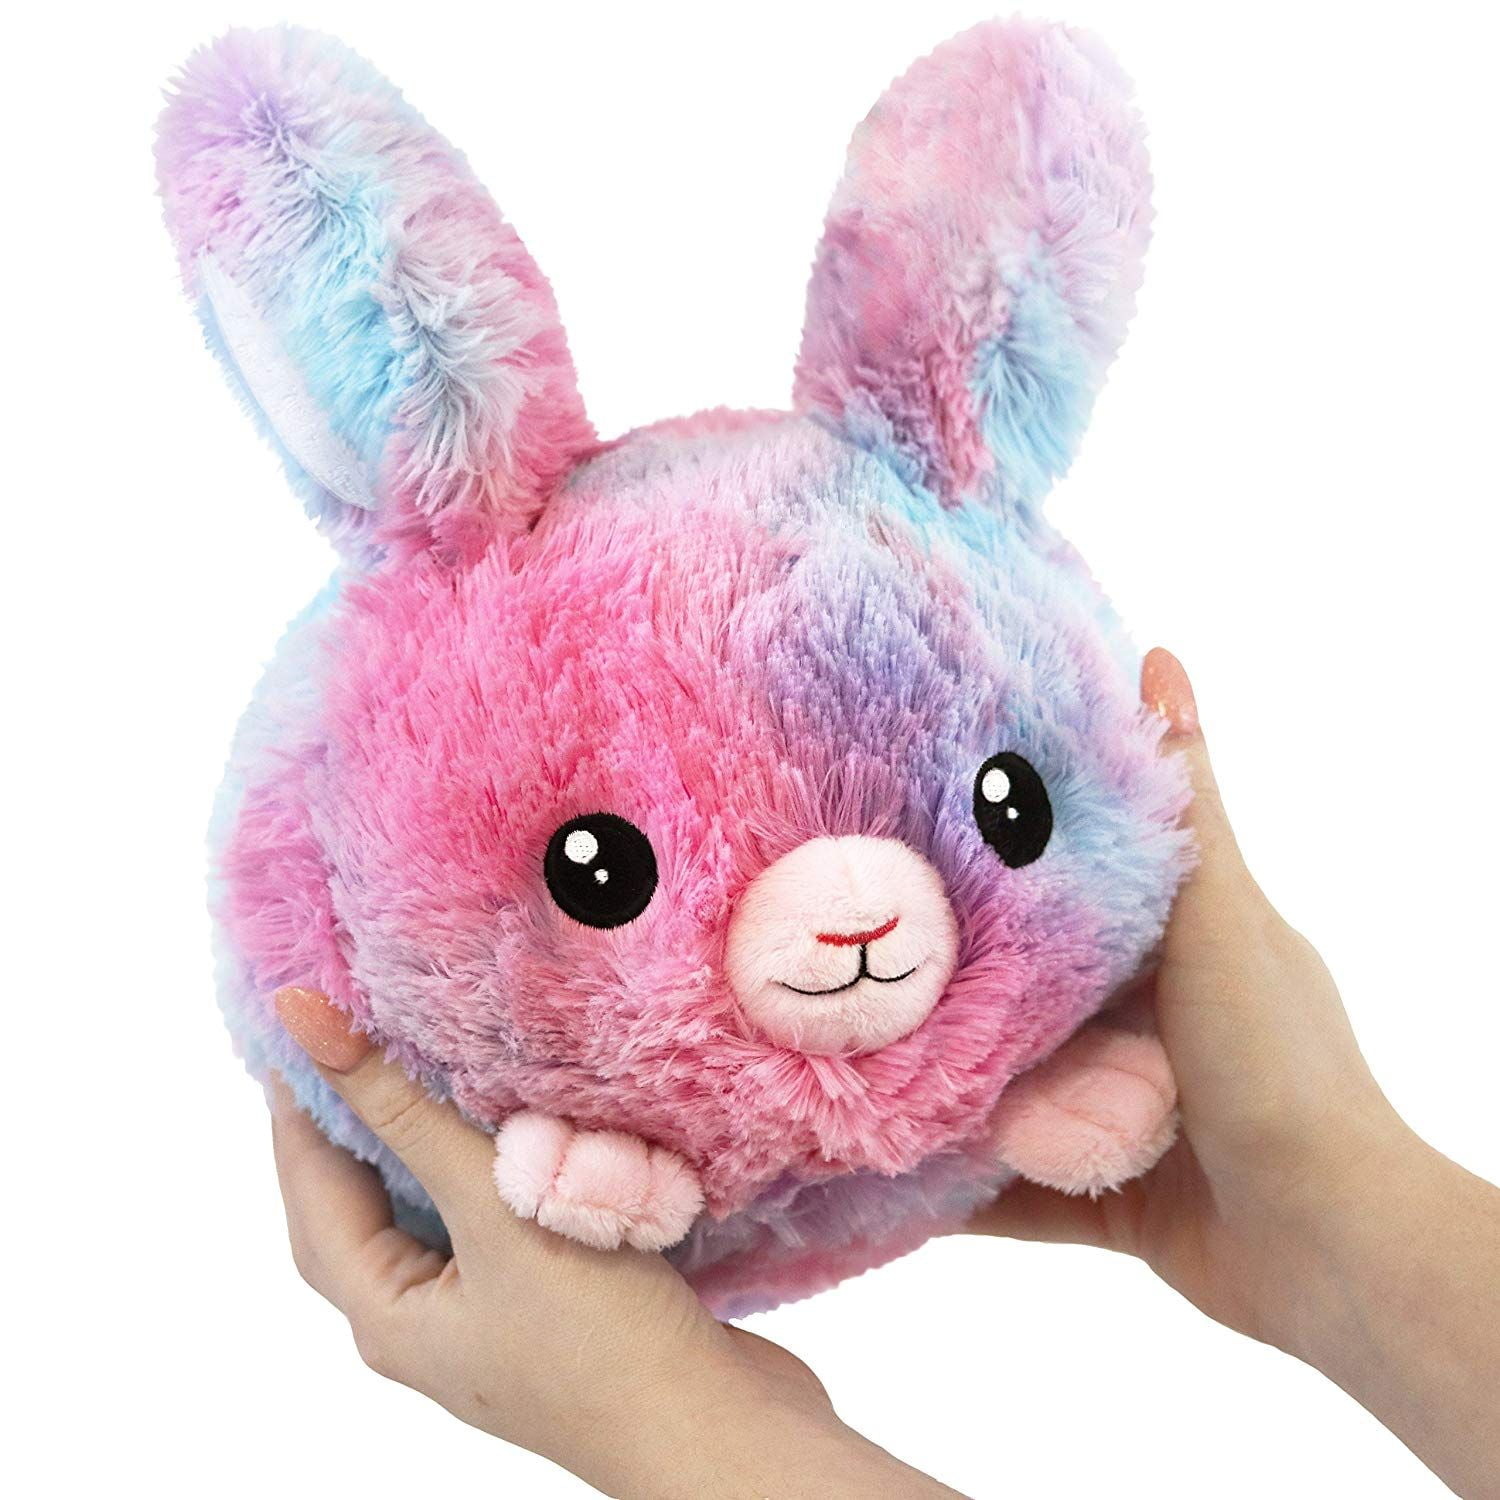 Cotton Candy Cuddly Bunny Squishable Mini 7 inch - Stuffed Animal (105360)  